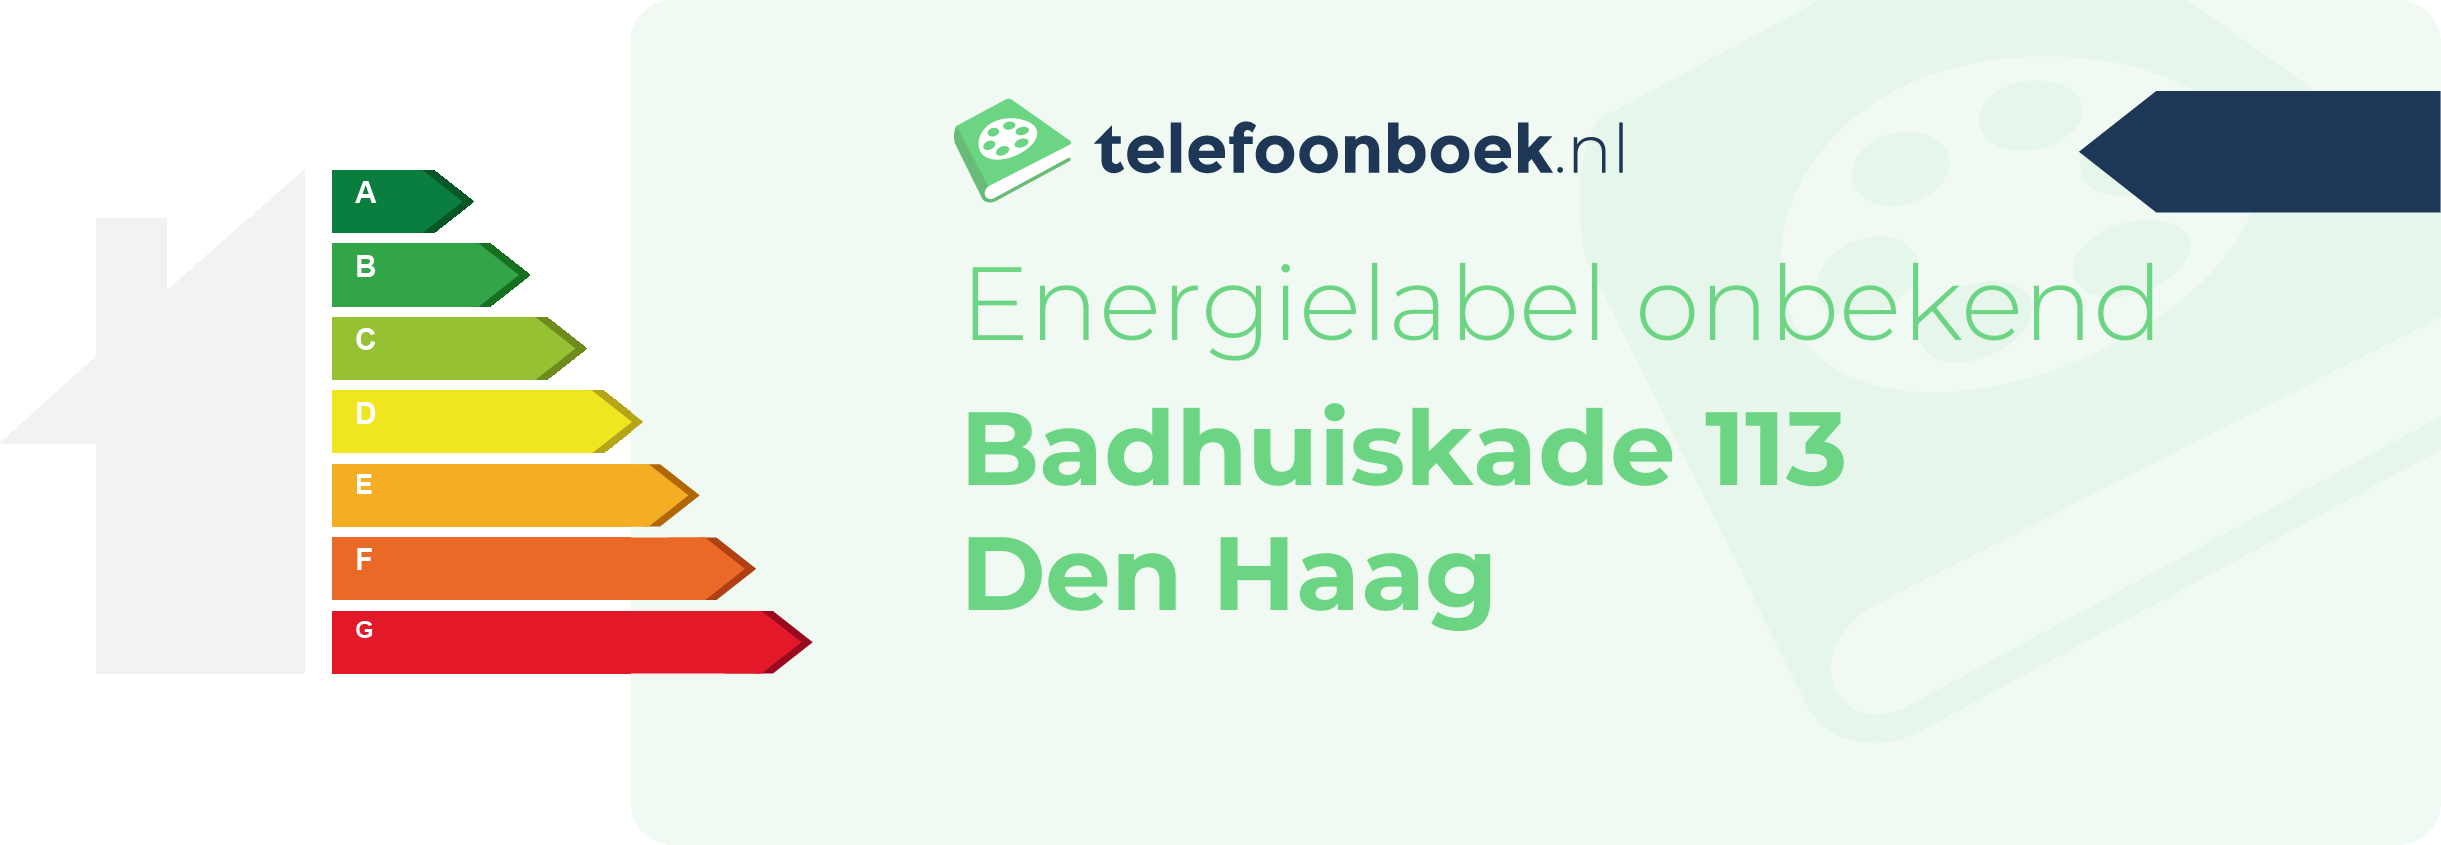 Energielabel Badhuiskade 113 Den Haag